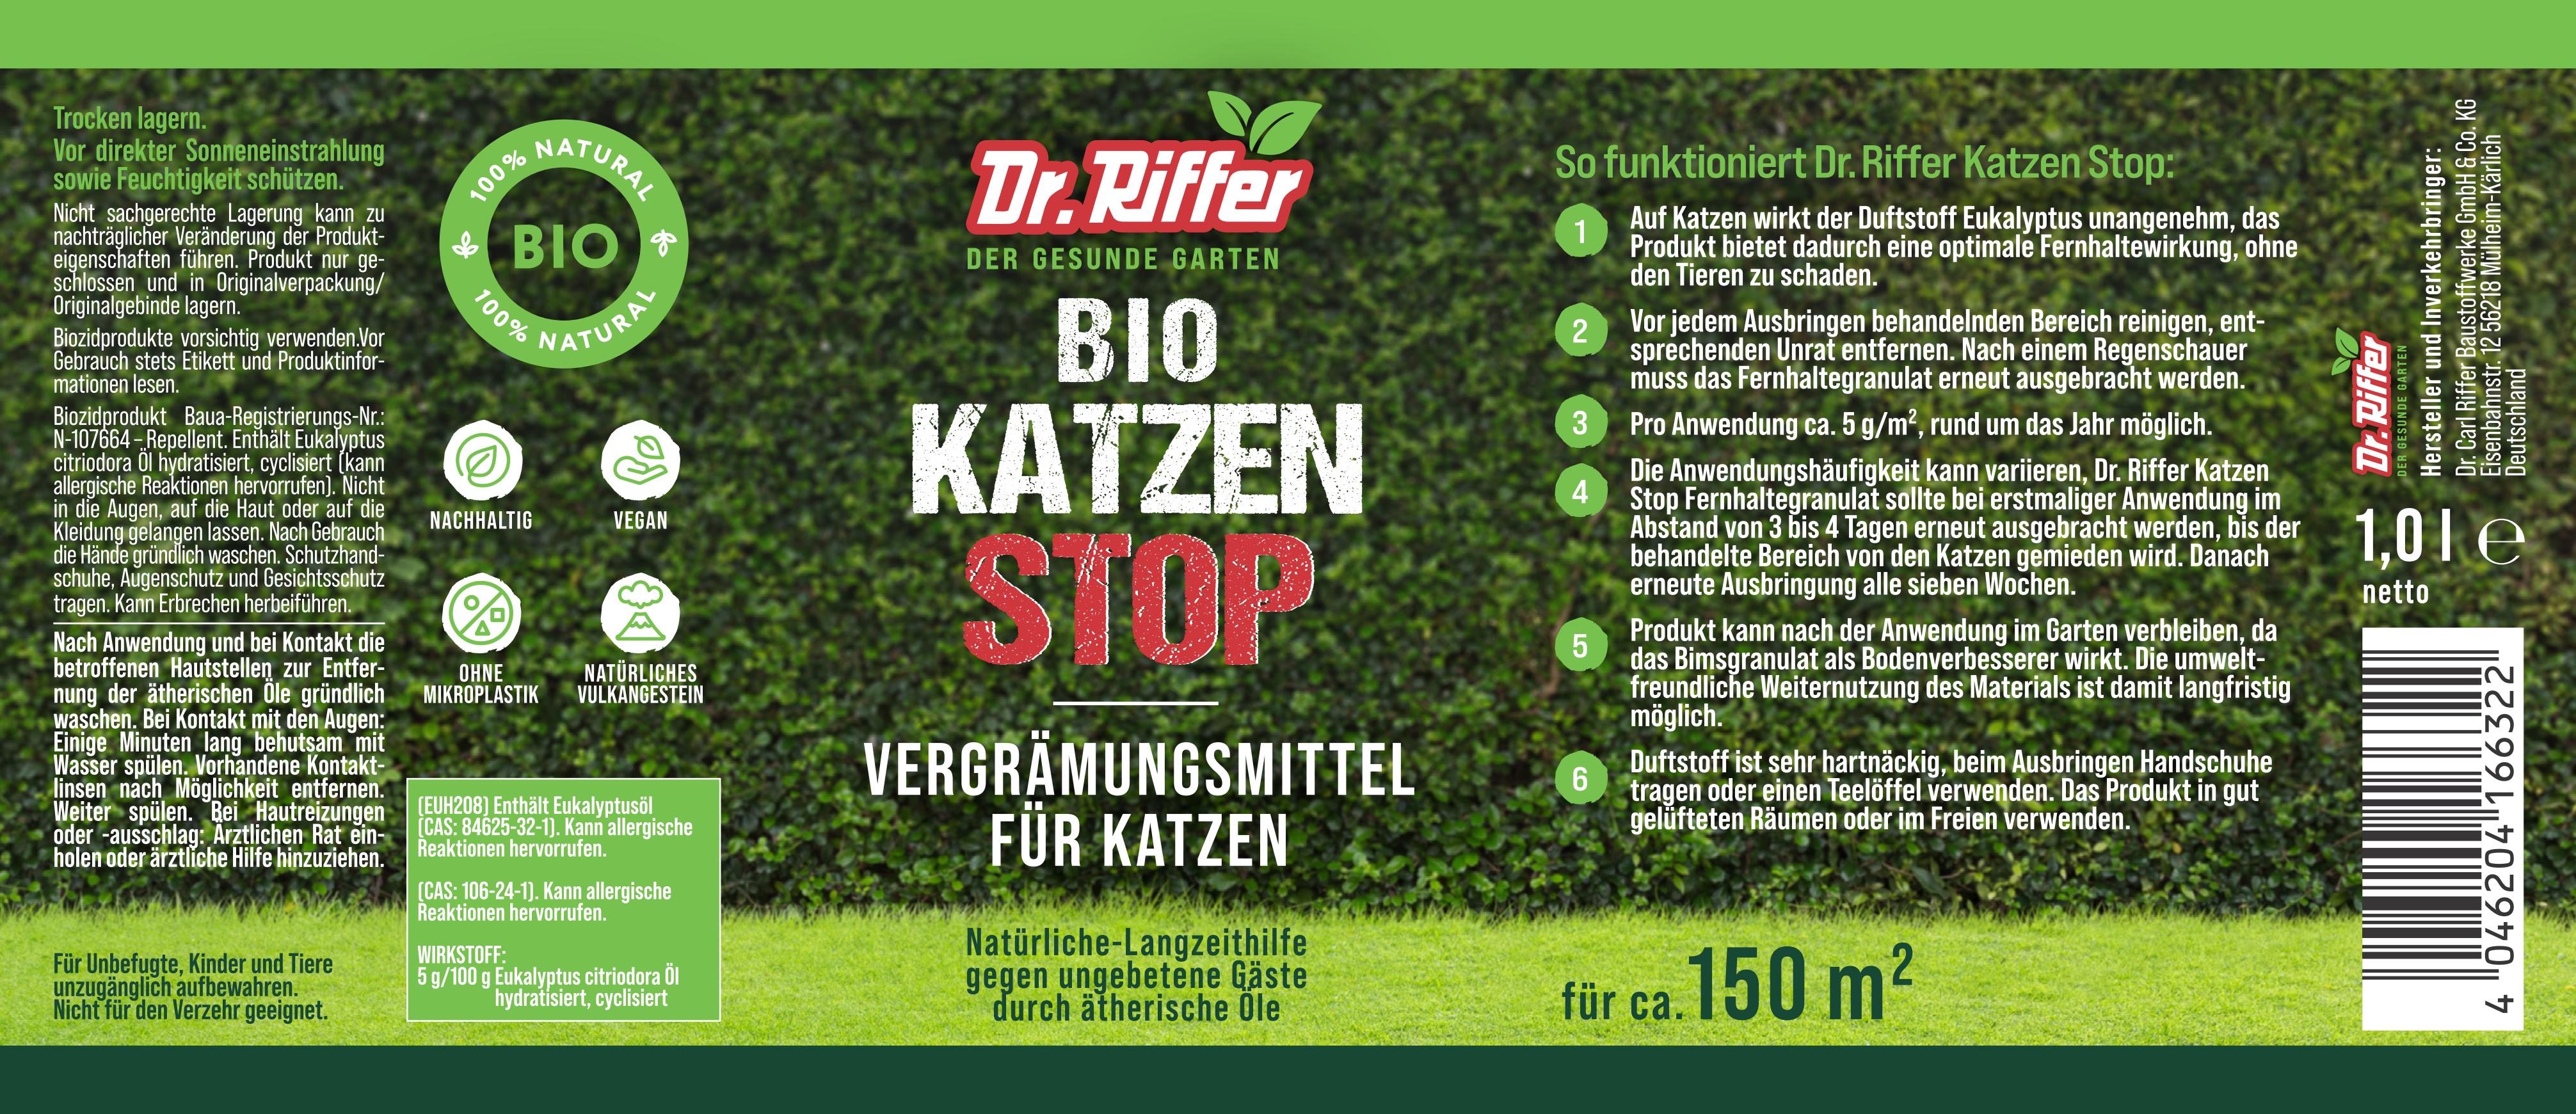 Dr. Riffer Katzen Stop